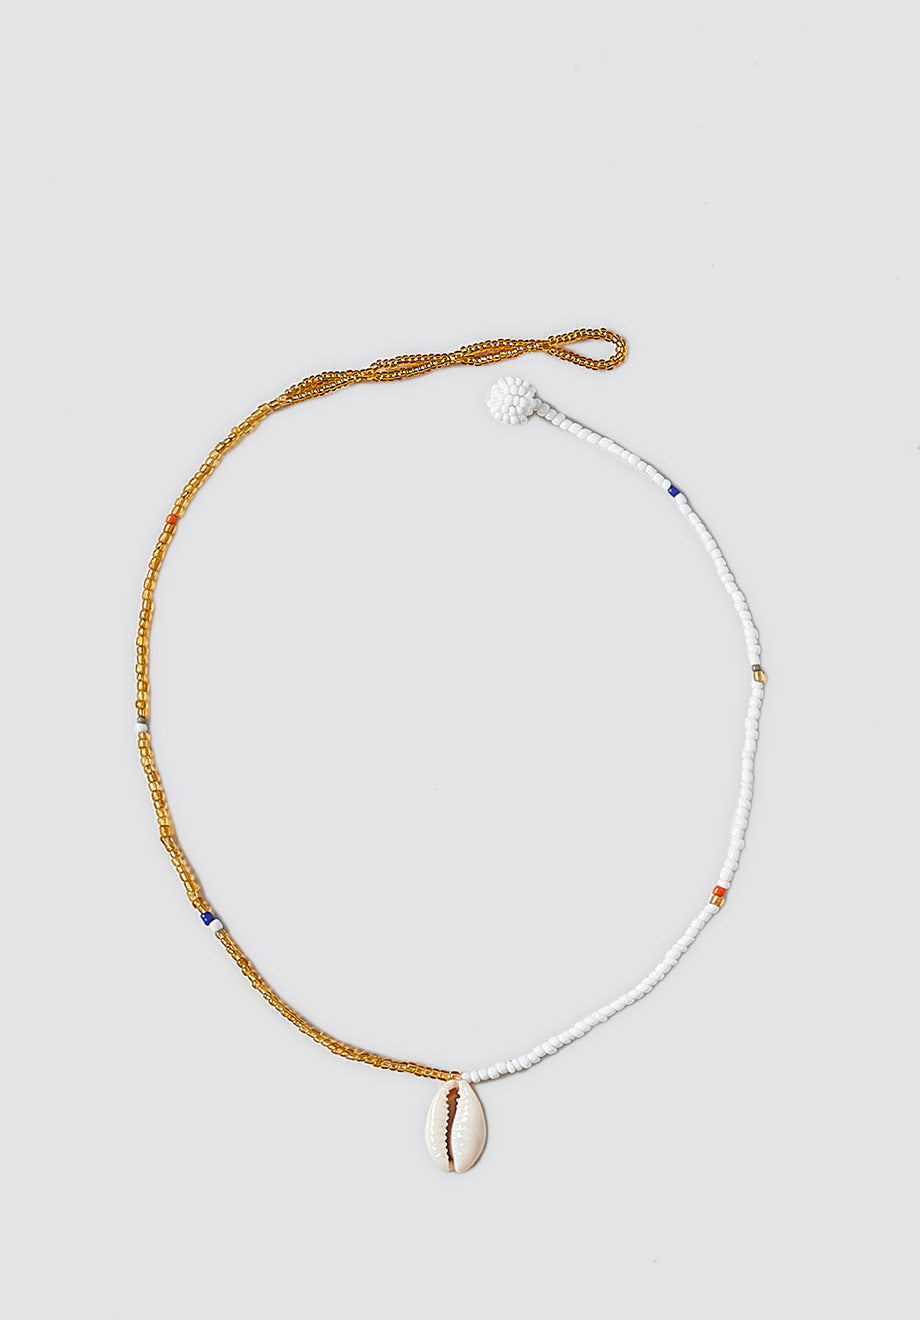 Beaded Necklace | A Single Shell